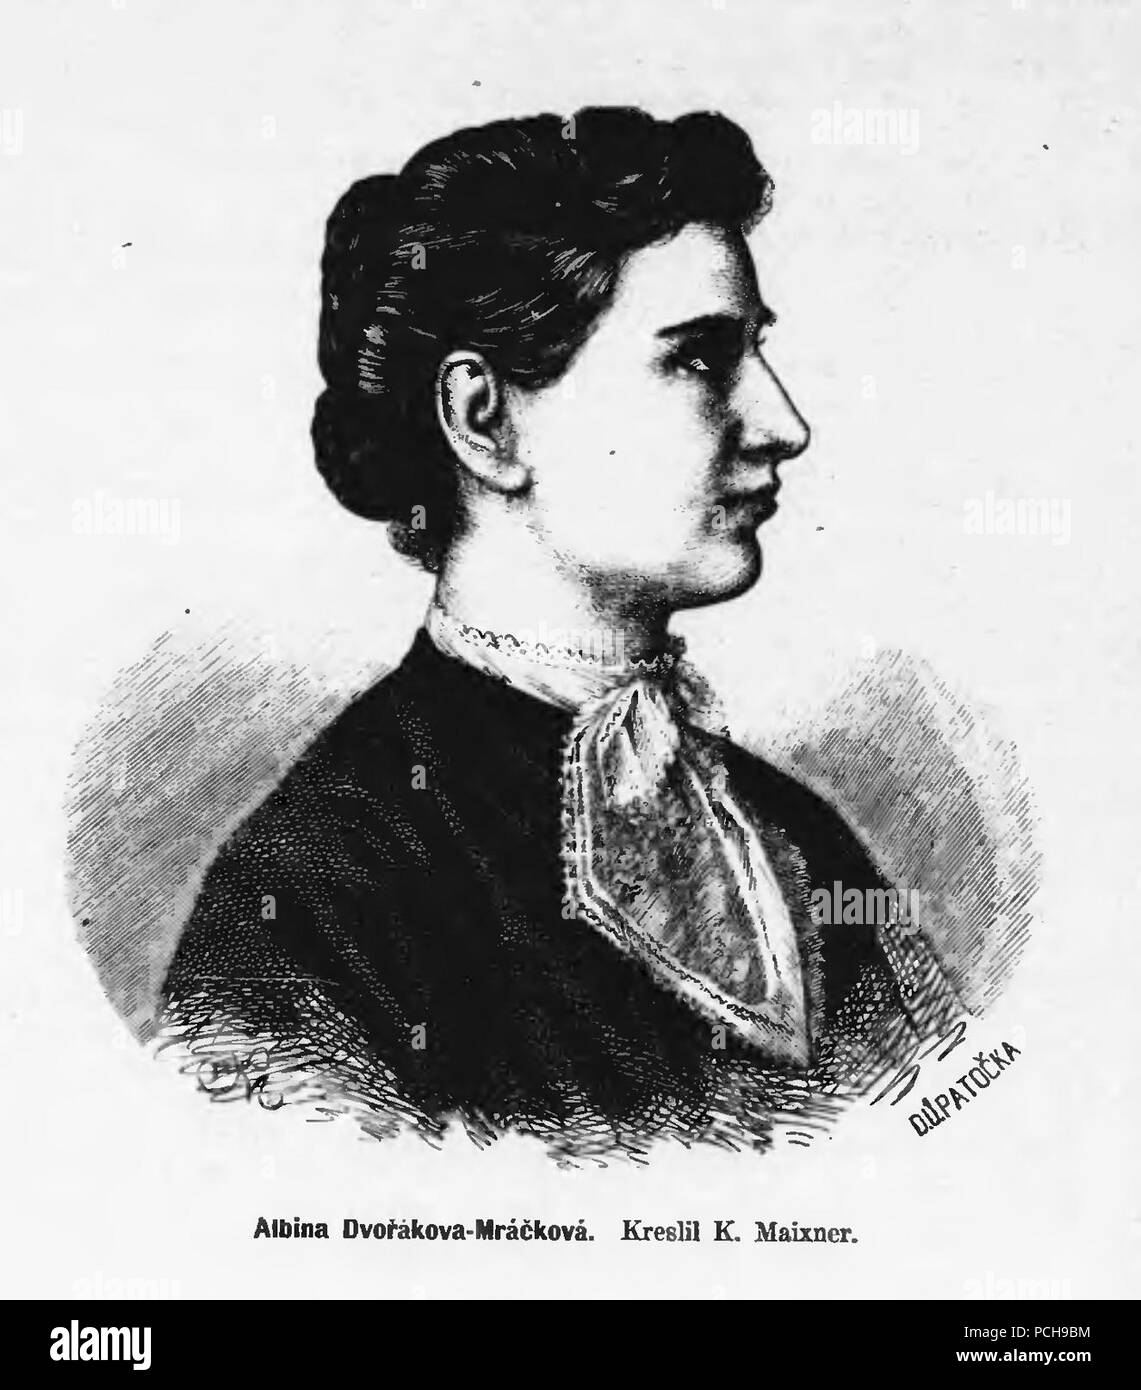 Albina Dvorakova Mrackova 1872 Maixner. Stock Photo